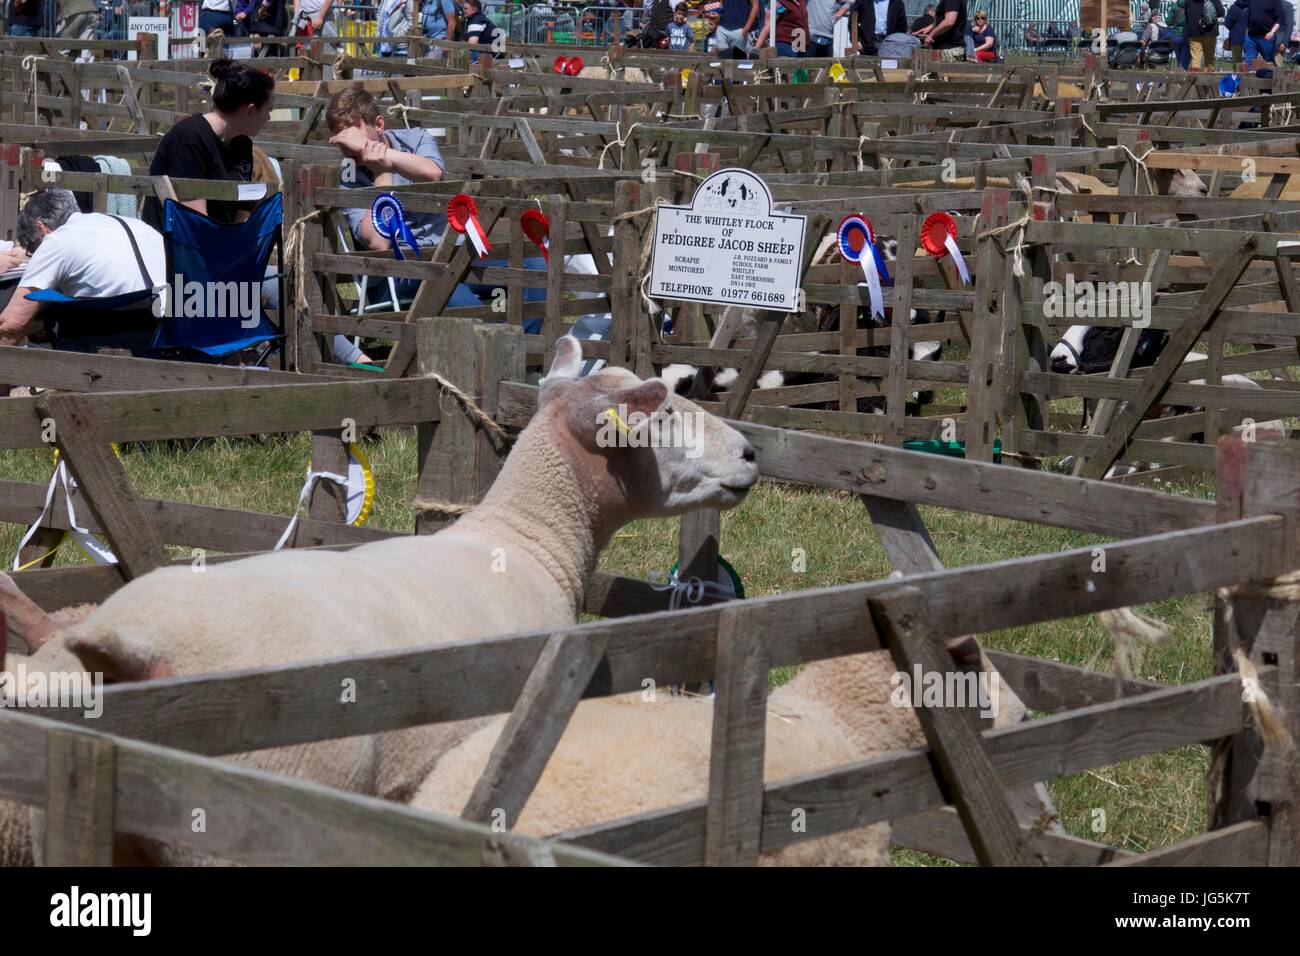 Sheep in sheep pens at Malton Show, Malton, North Yorkshire, UK Stock Photo